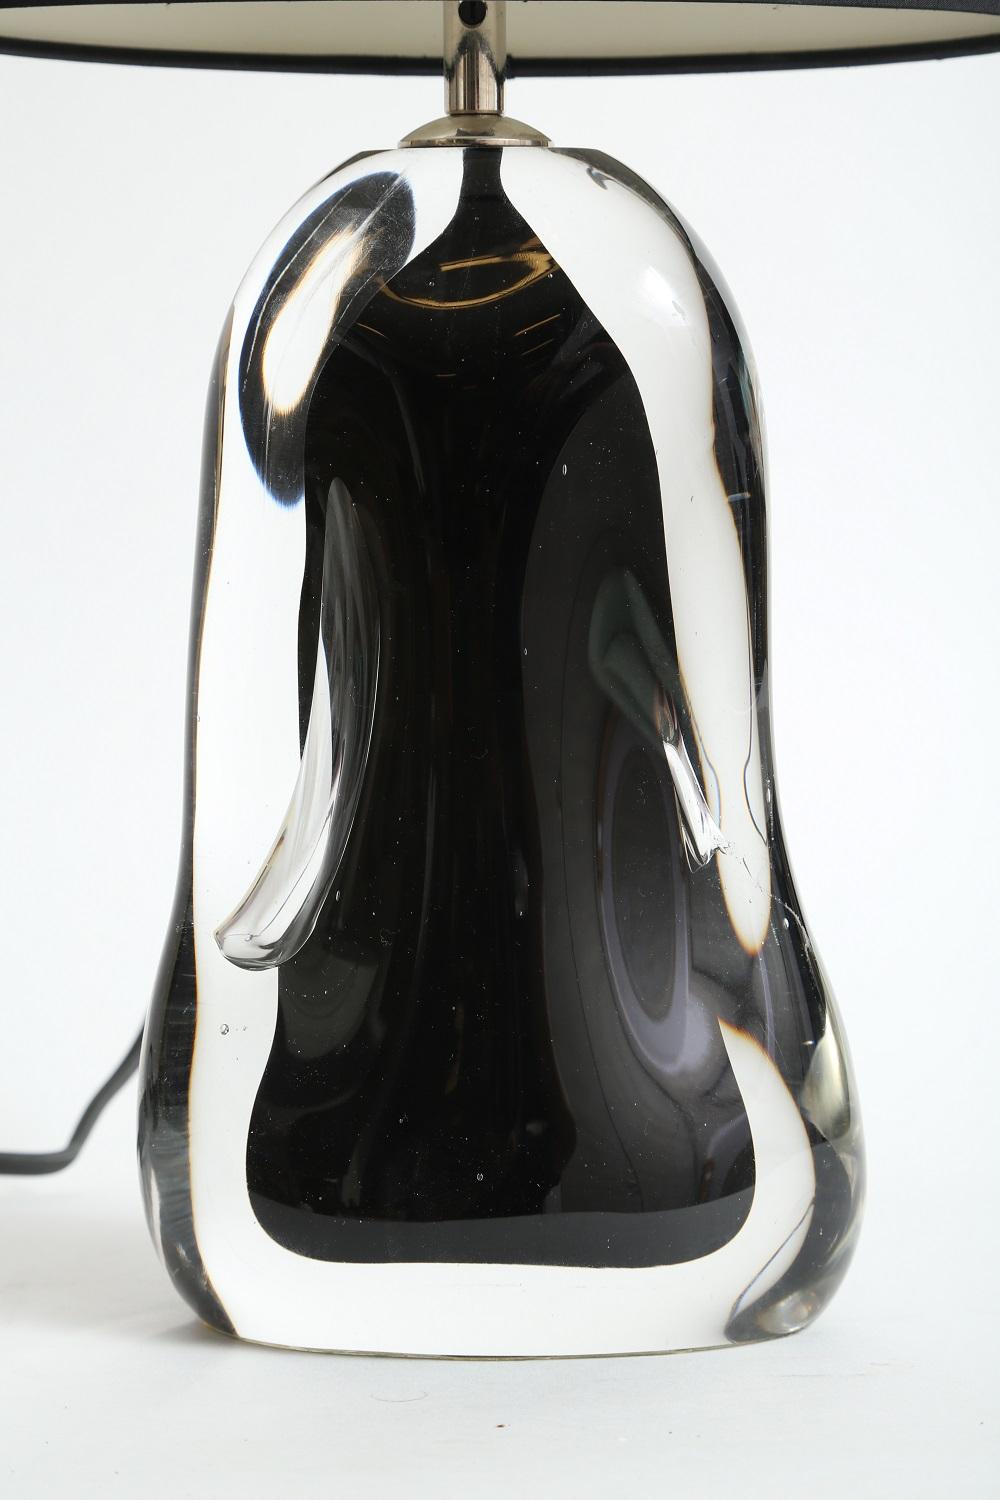 Perfume bottle table lamp in black by Porta Romana. 
Dimensions: 
20.25